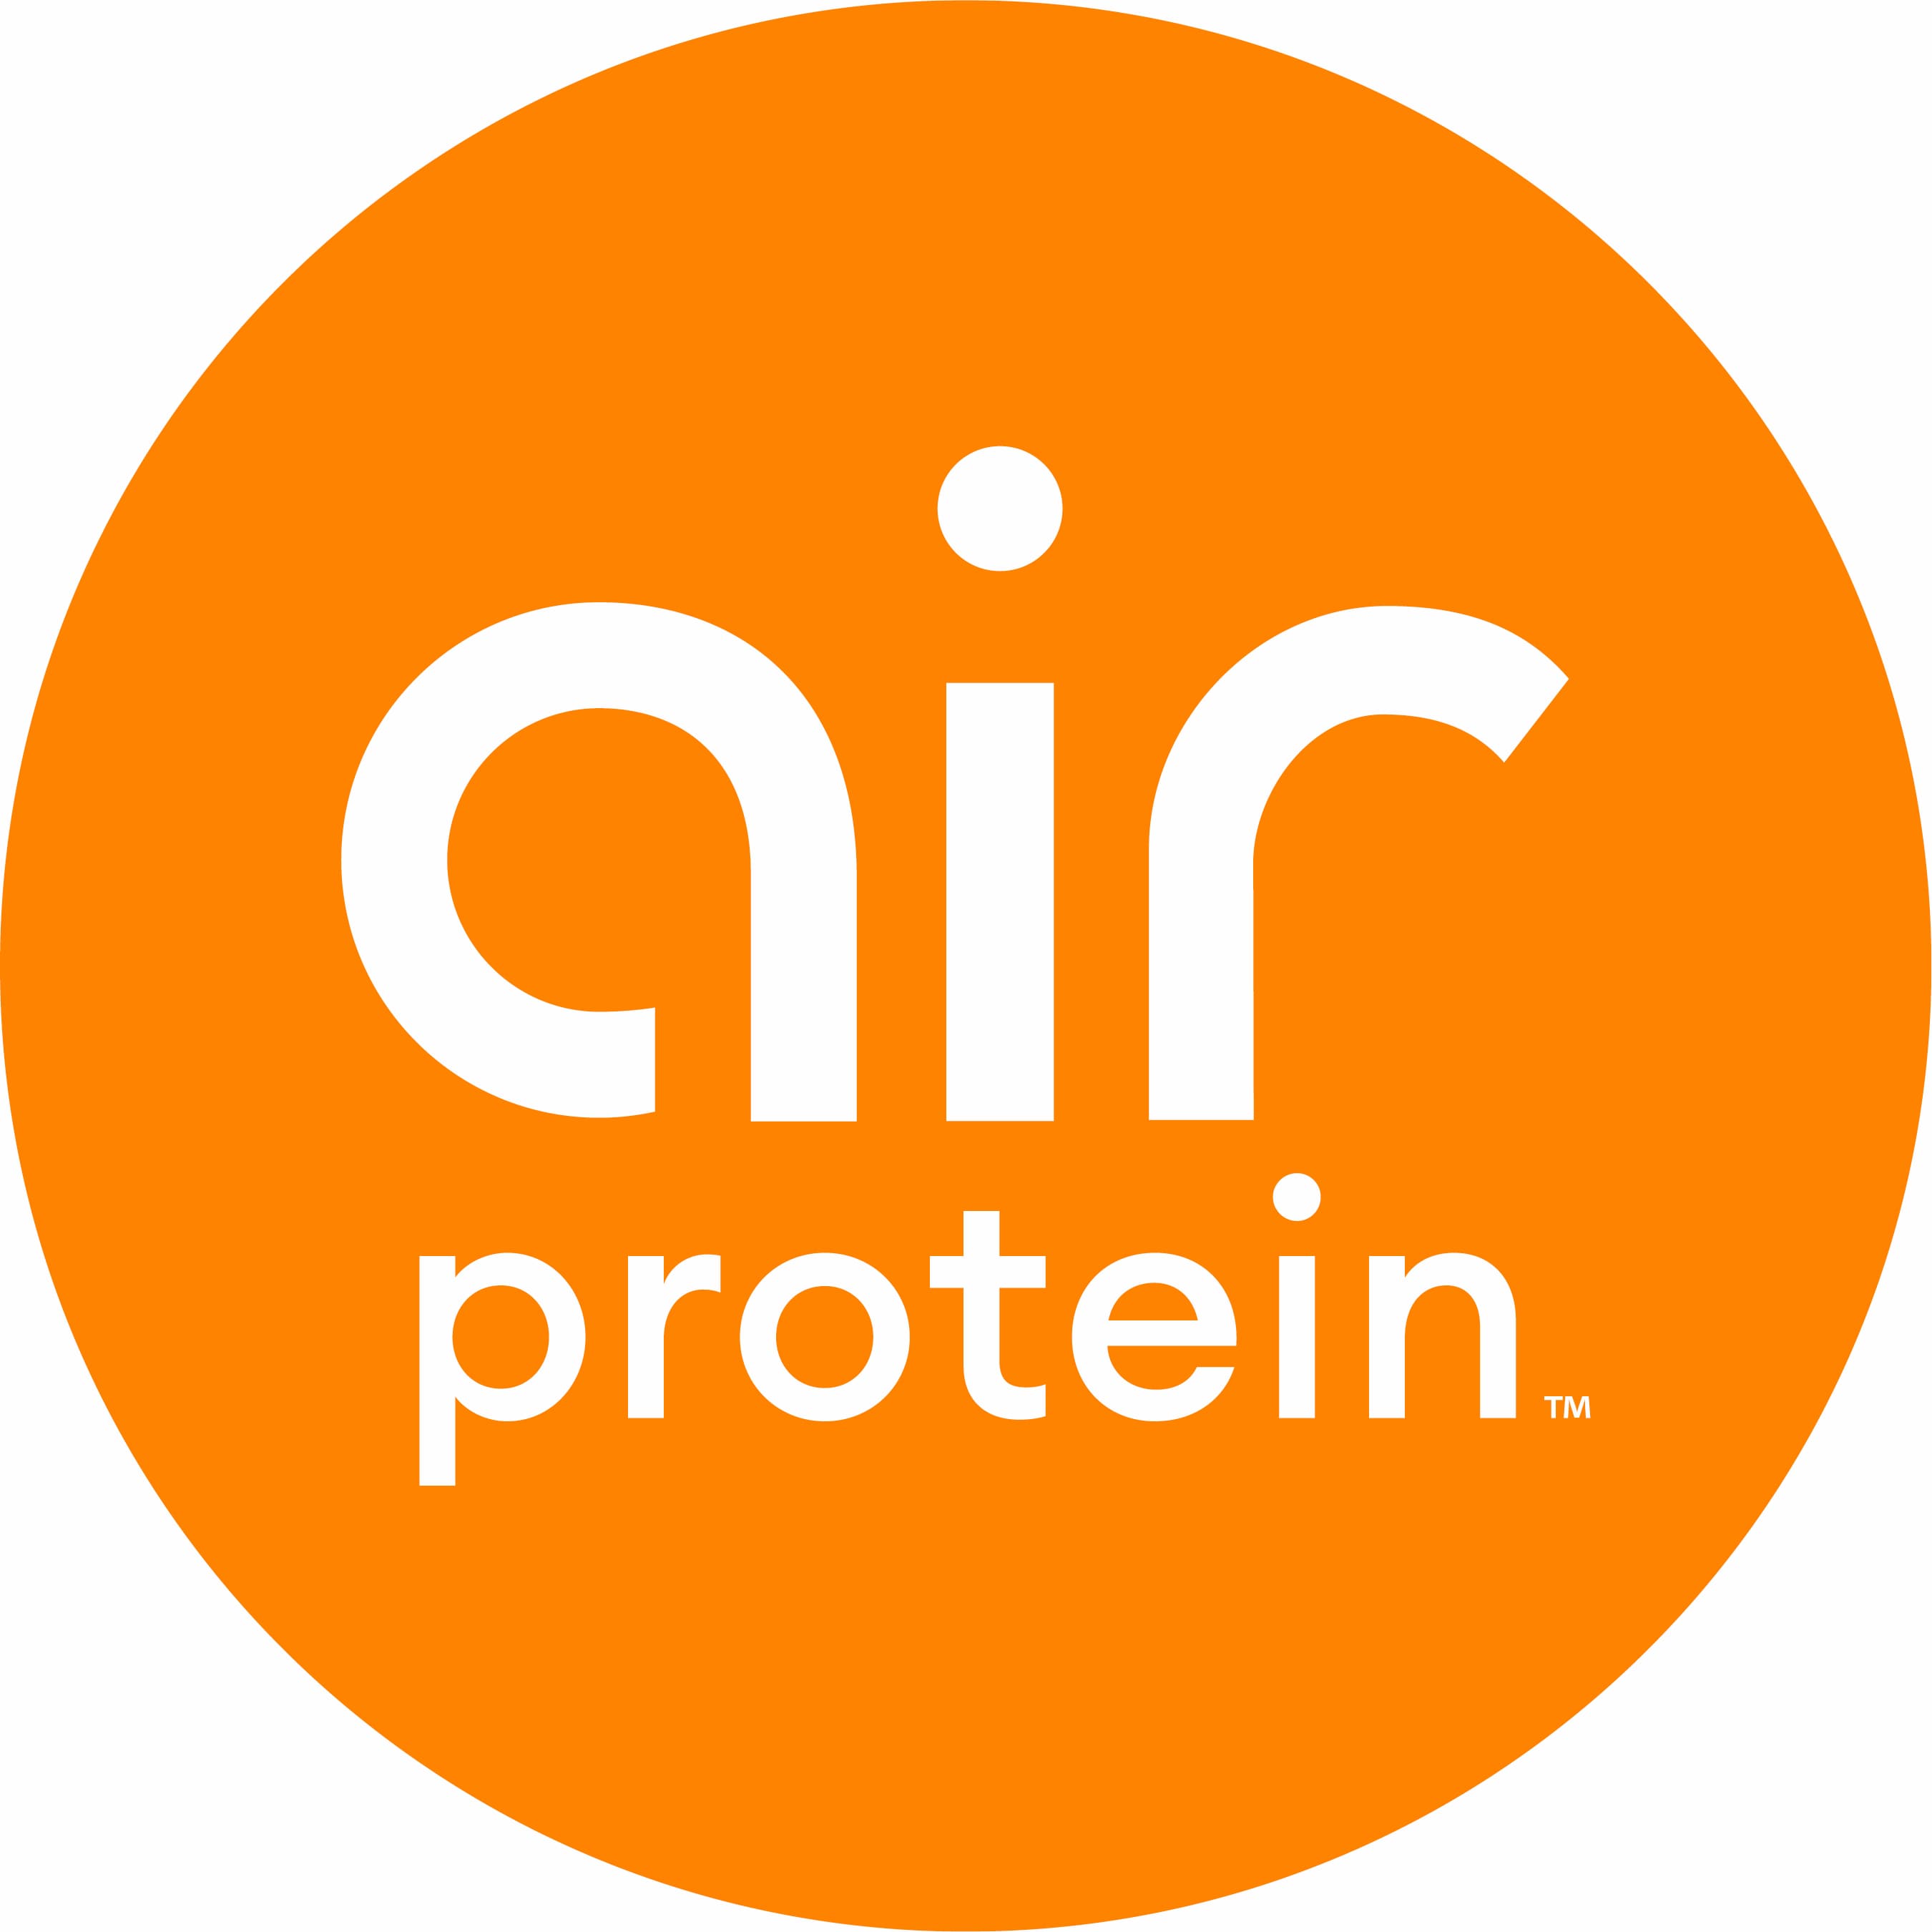 www.airprotein.com